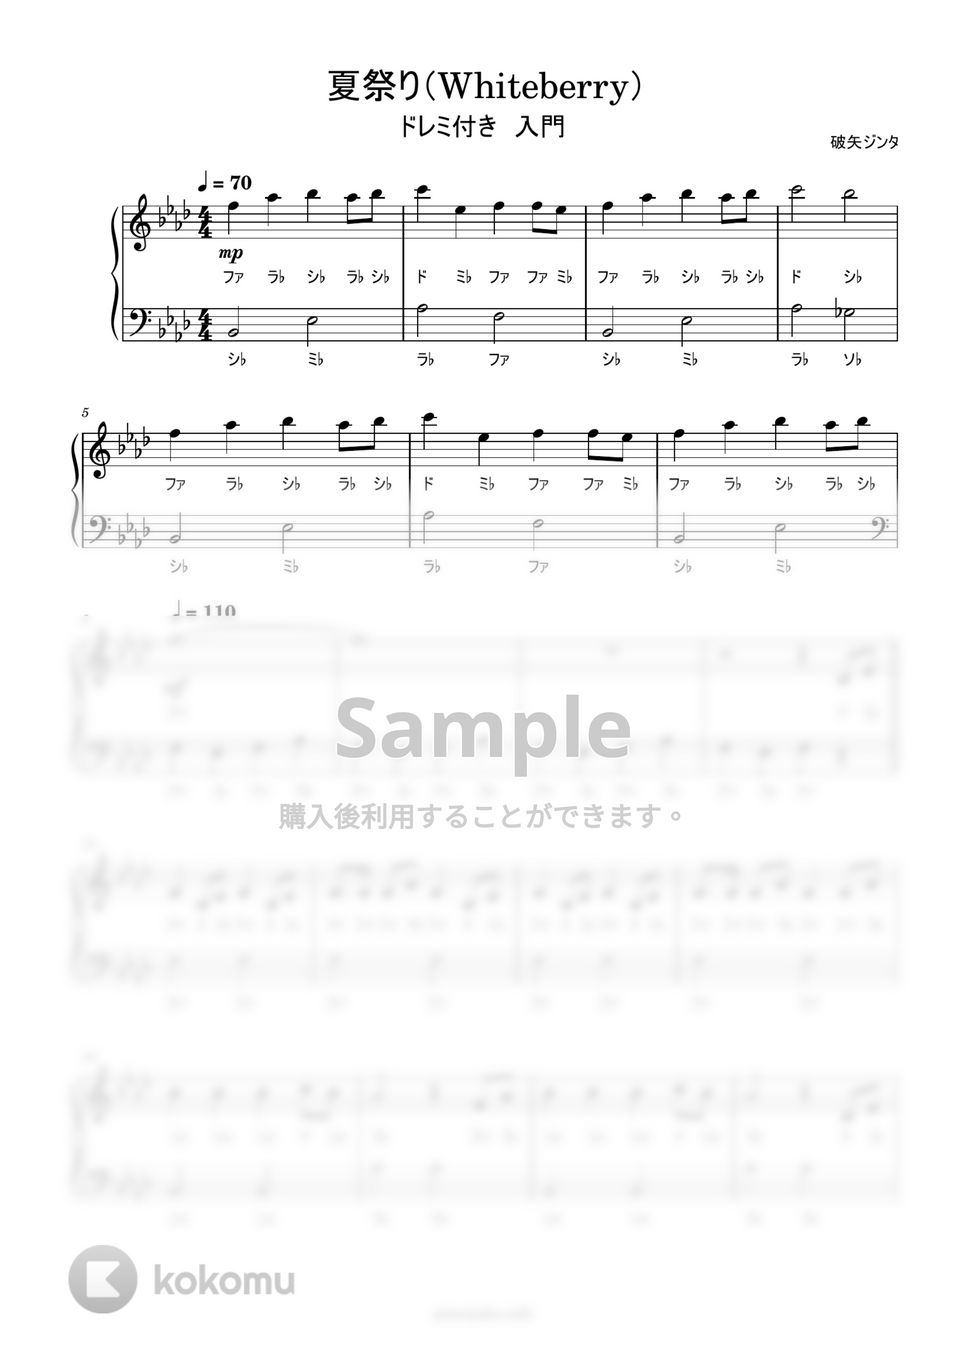 Whiteberry - 夏祭り (ドレミ付き/簡単楽譜) by ピアノ塾